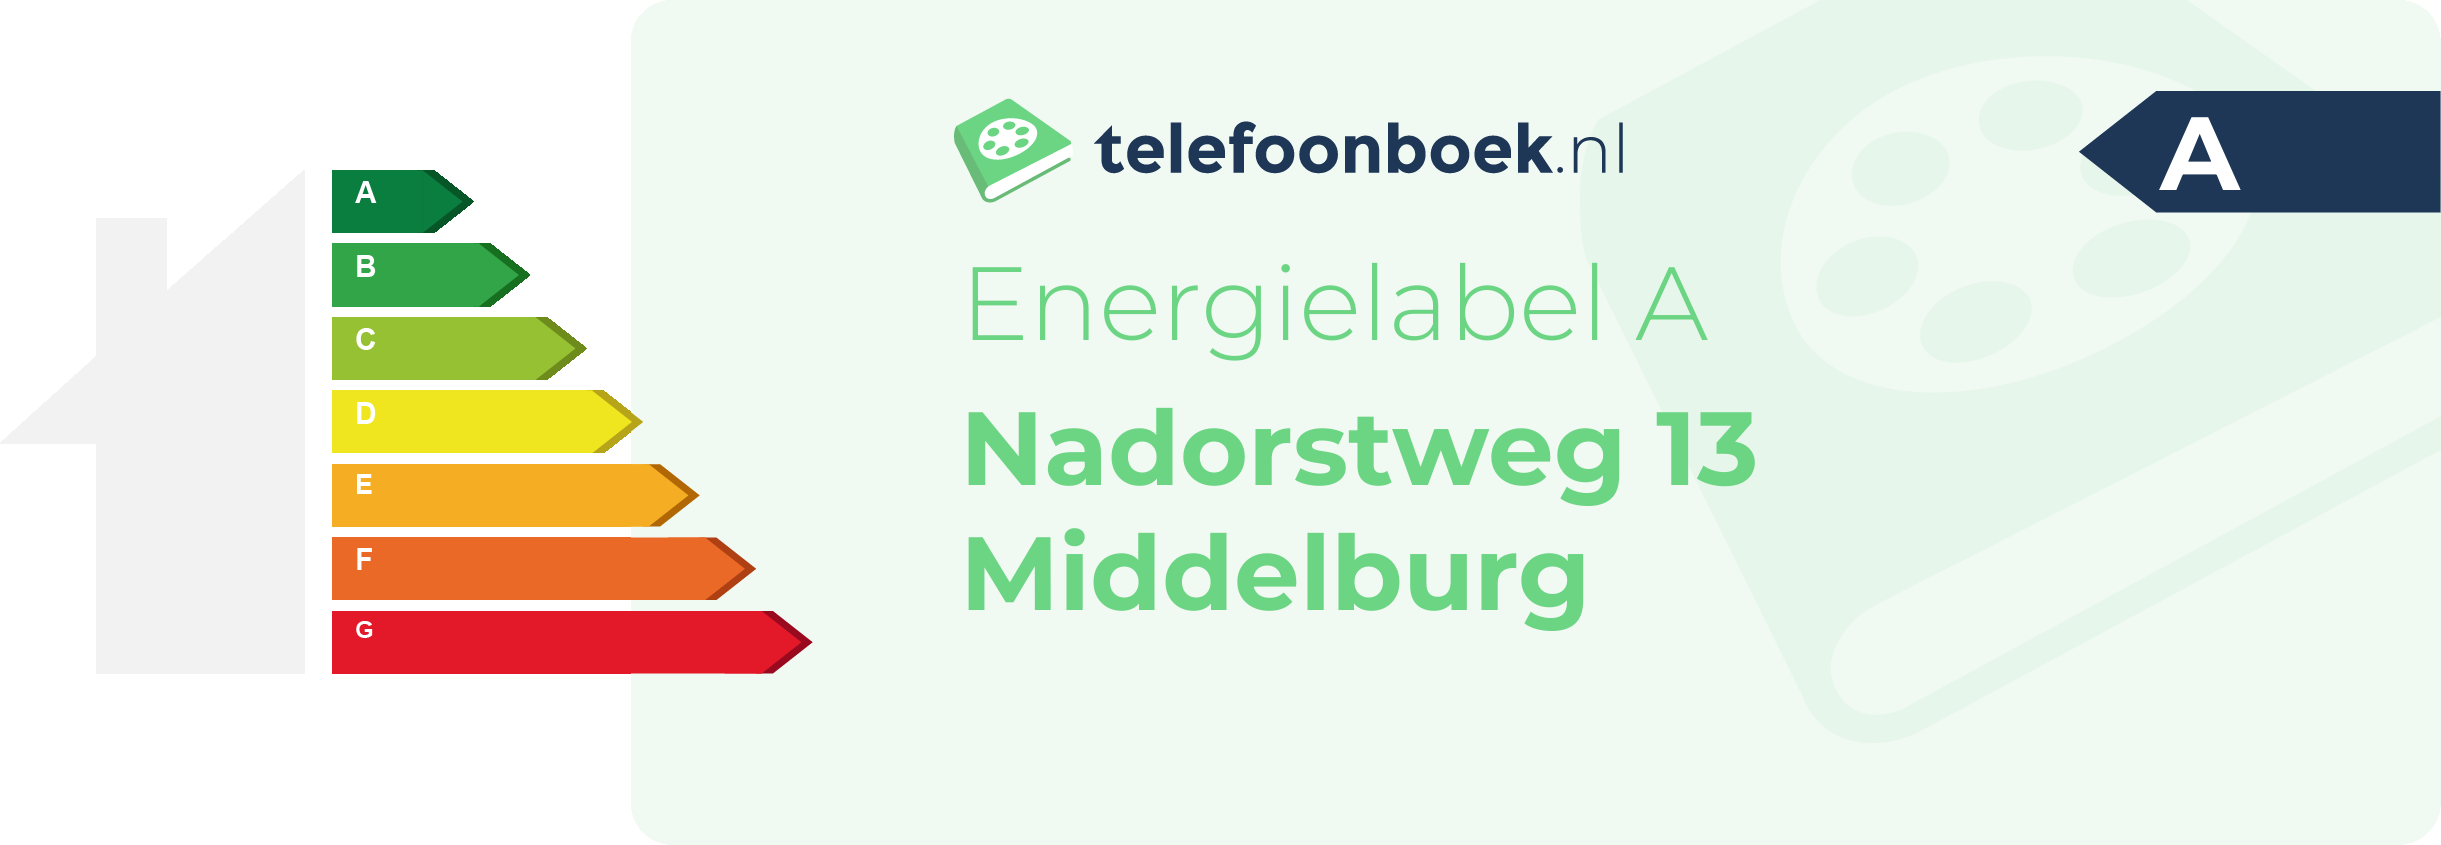 Energielabel Nadorstweg 13 Middelburg